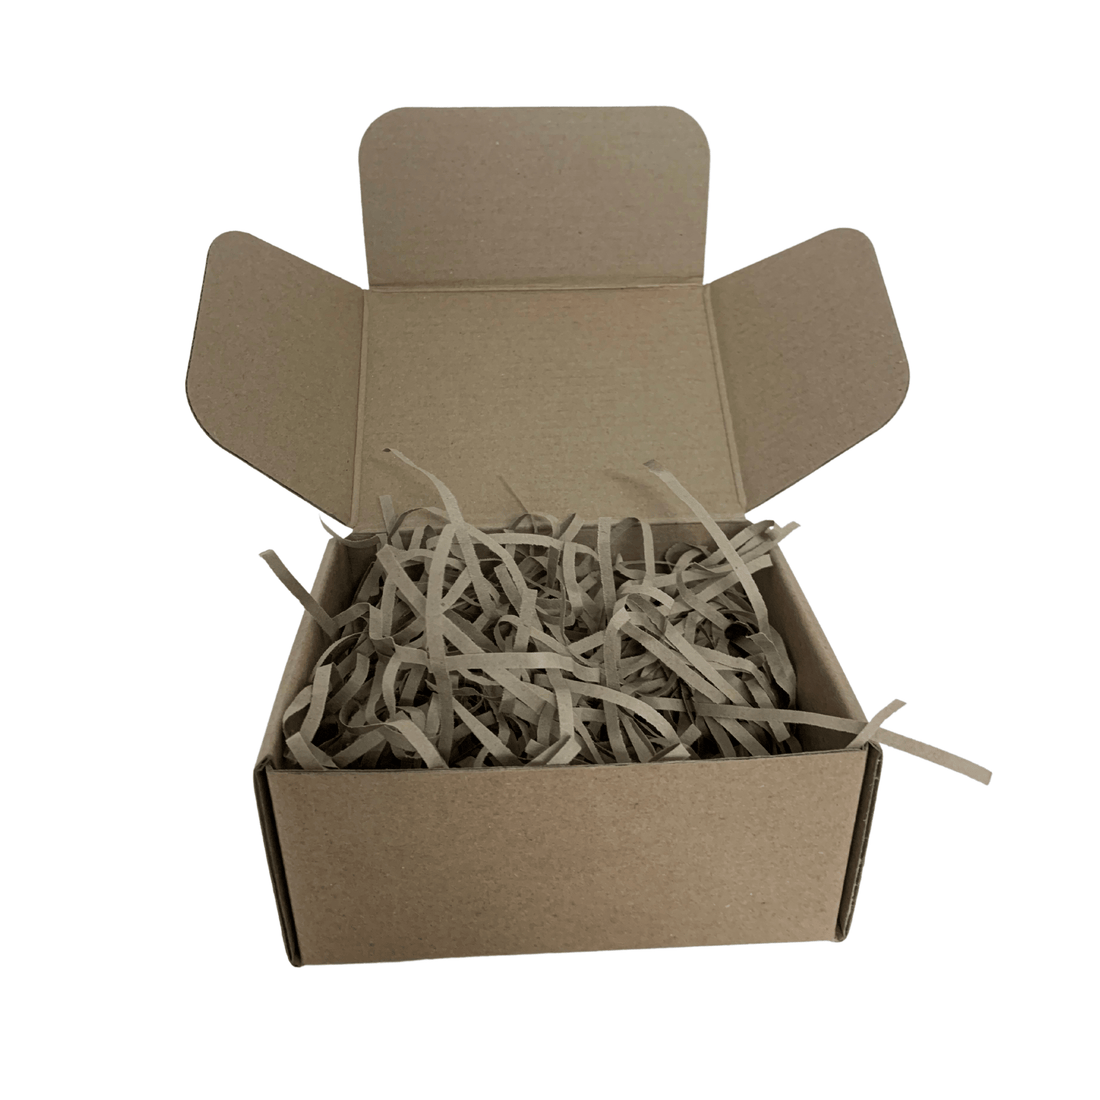 Kraft Narrow Shredded Paper - Happy Box